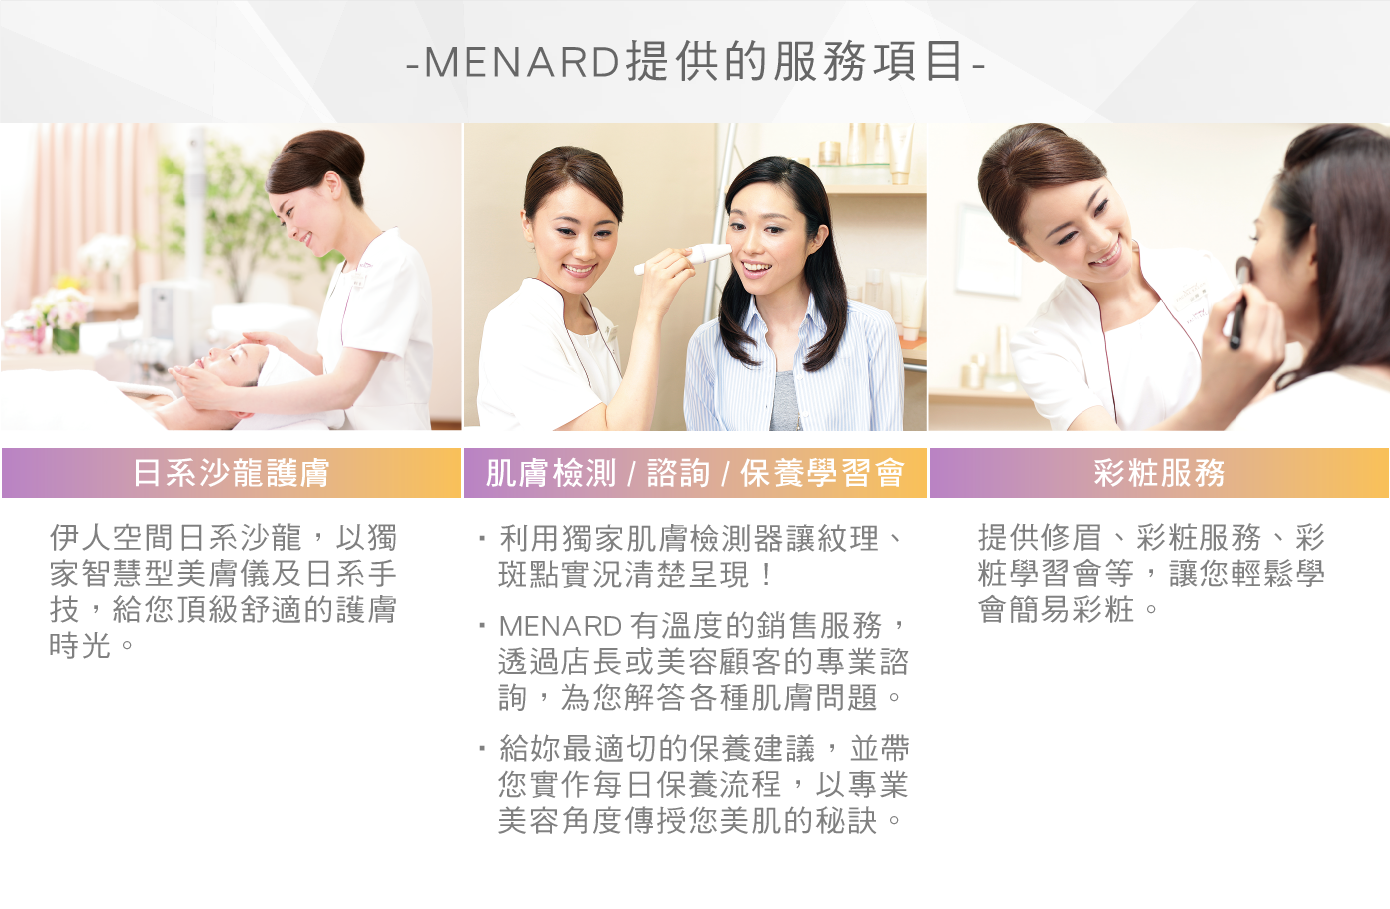 MENARD 提供的服務項目